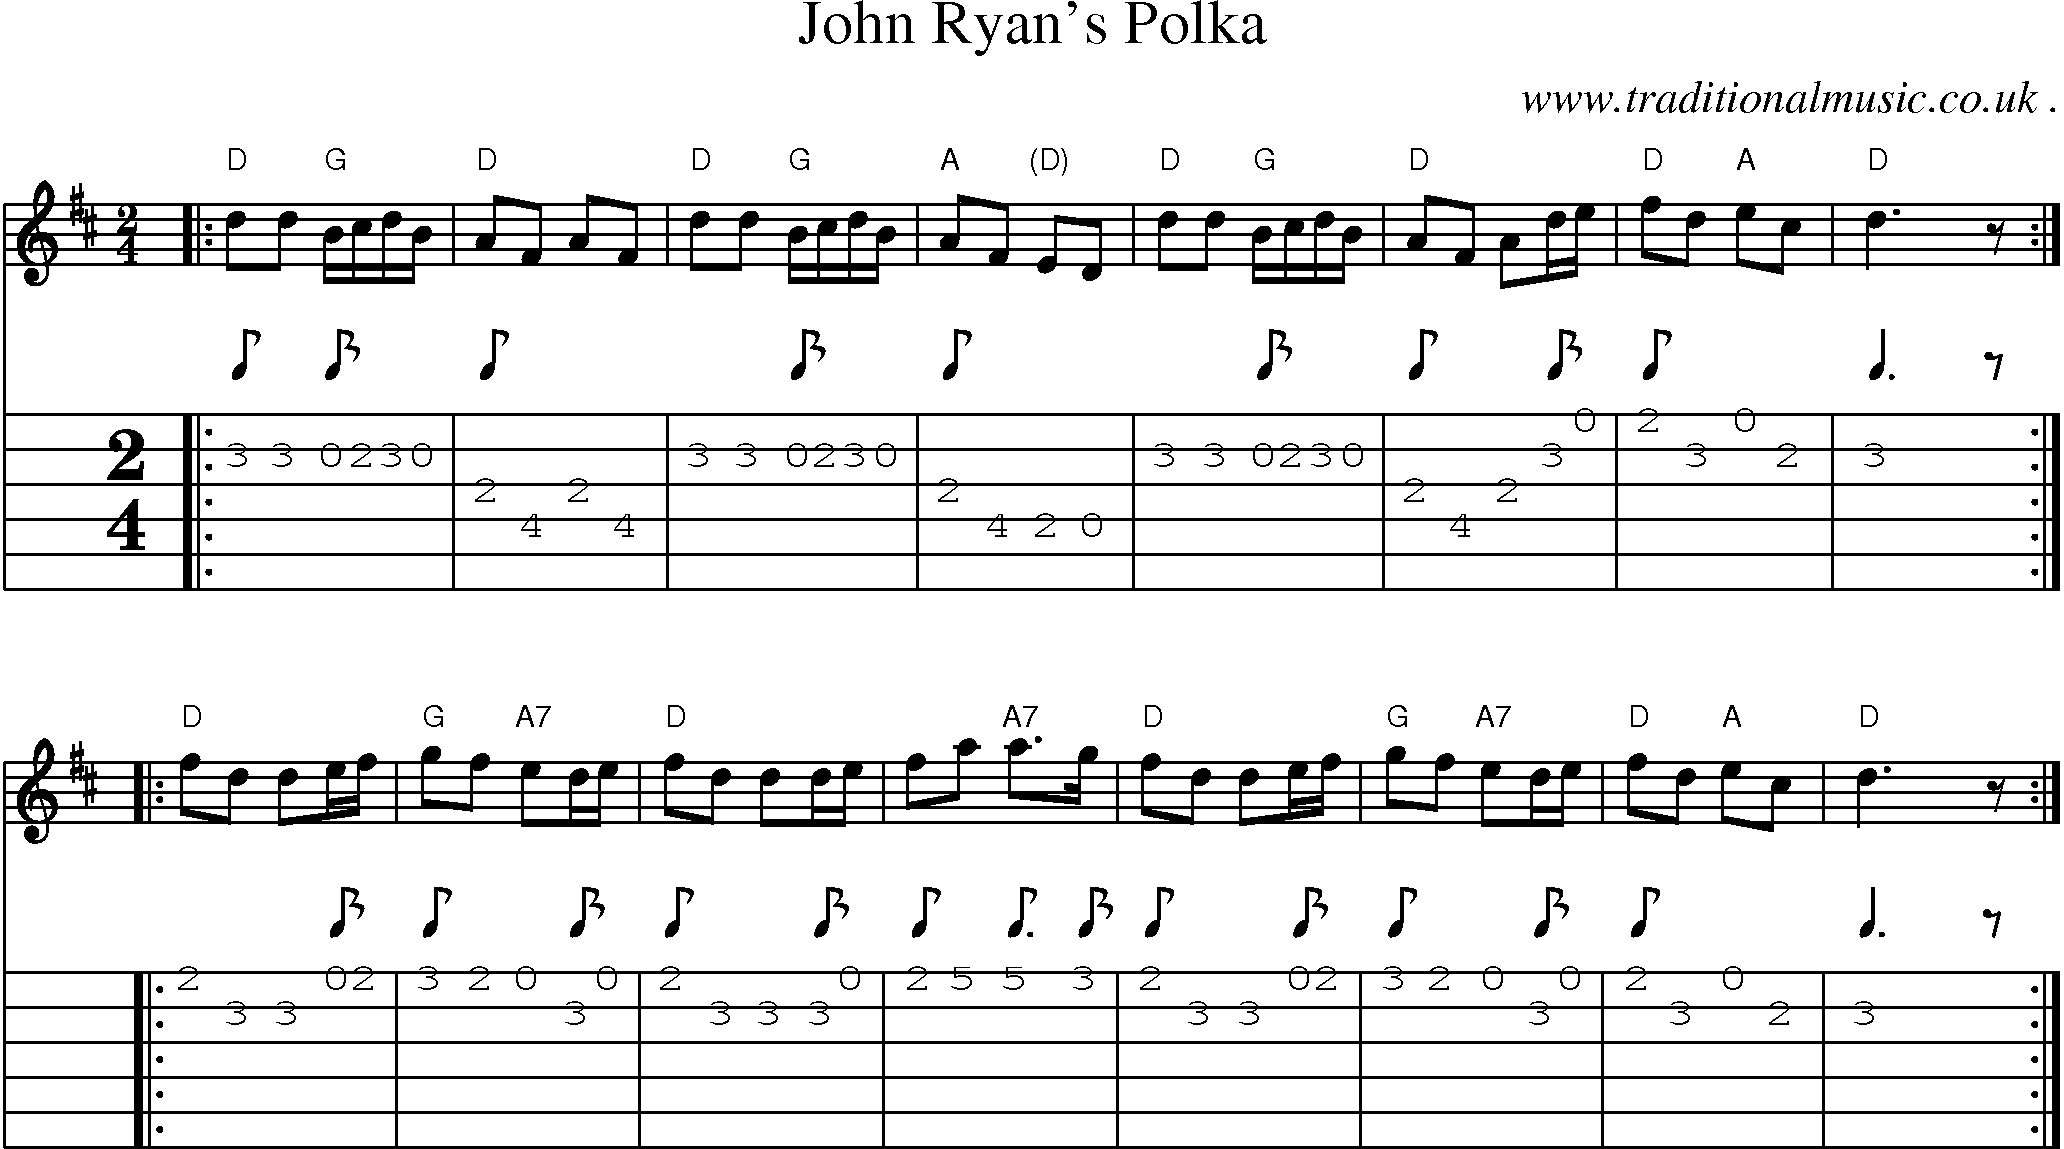 Sheet-music  score, Chords and Guitar Tabs for John Ryans Polka